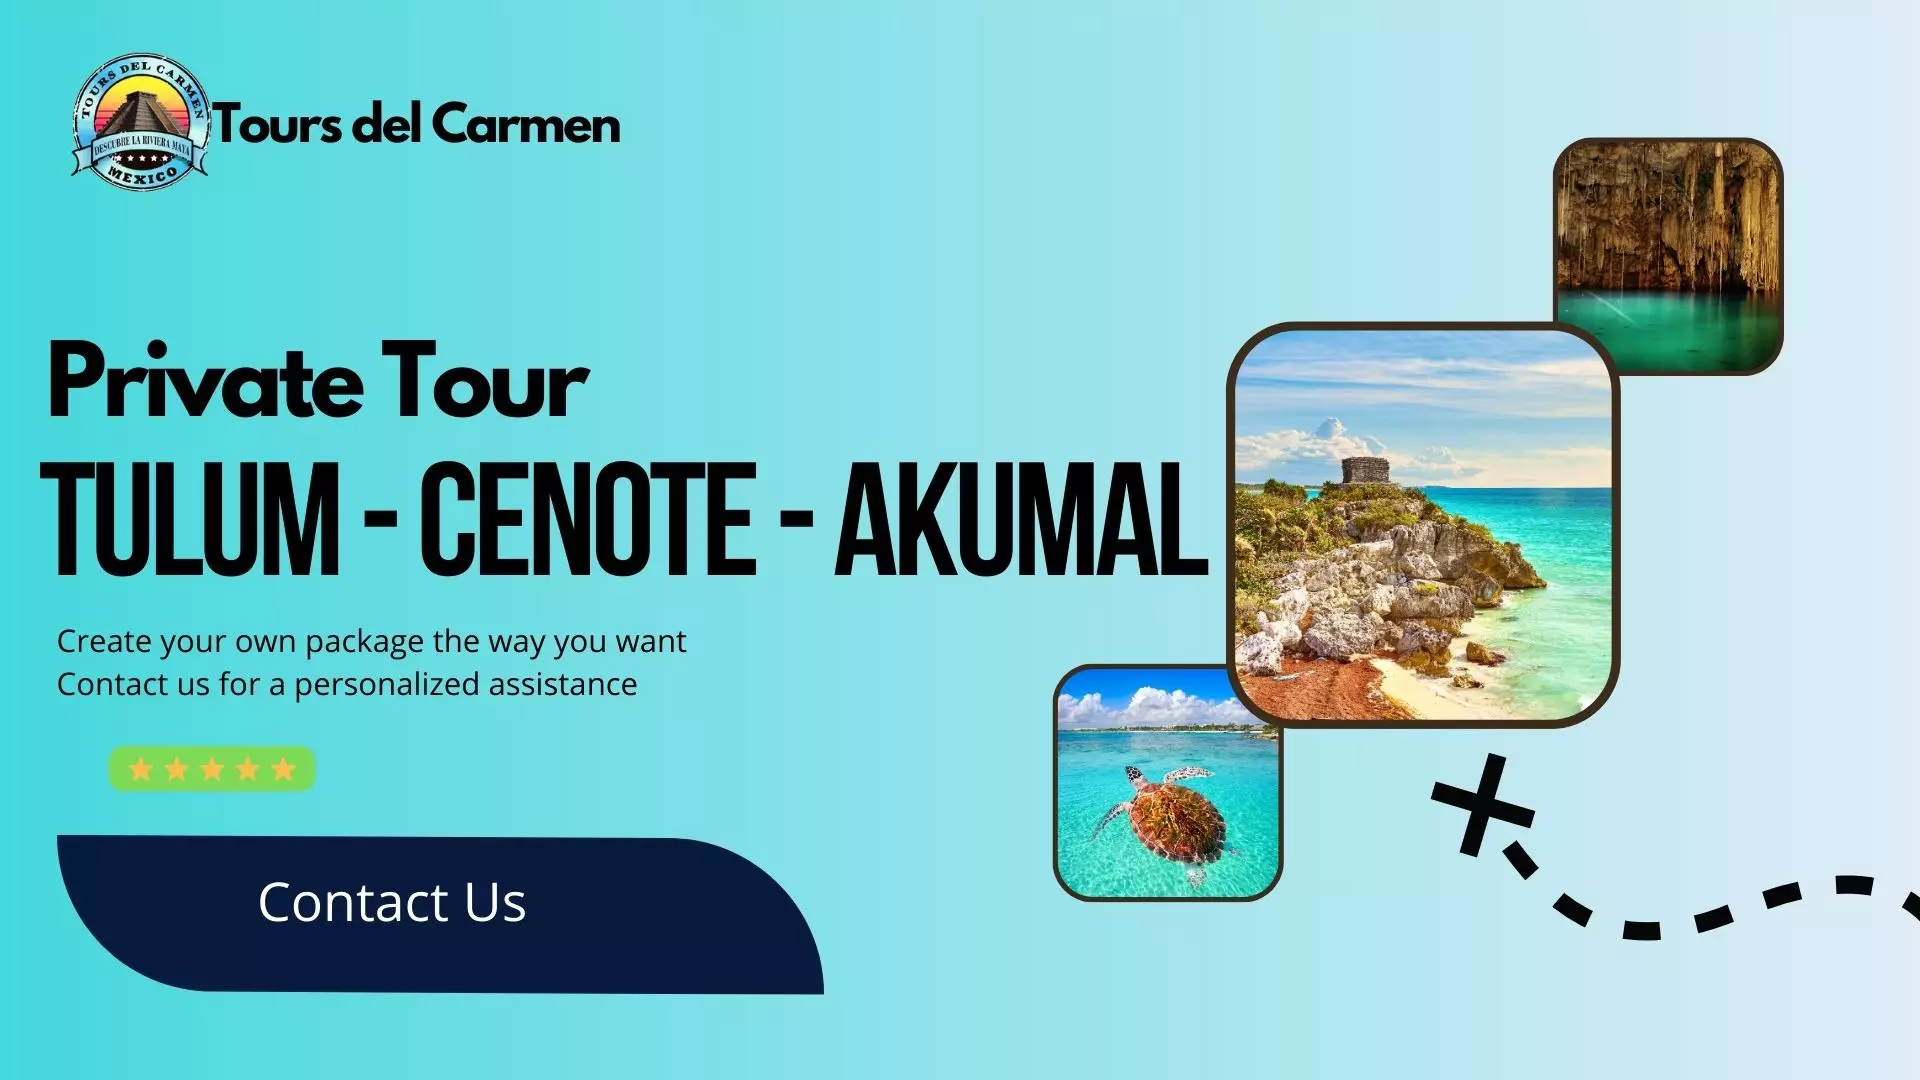 Tulum - Cenote - Akumal - Private Tour